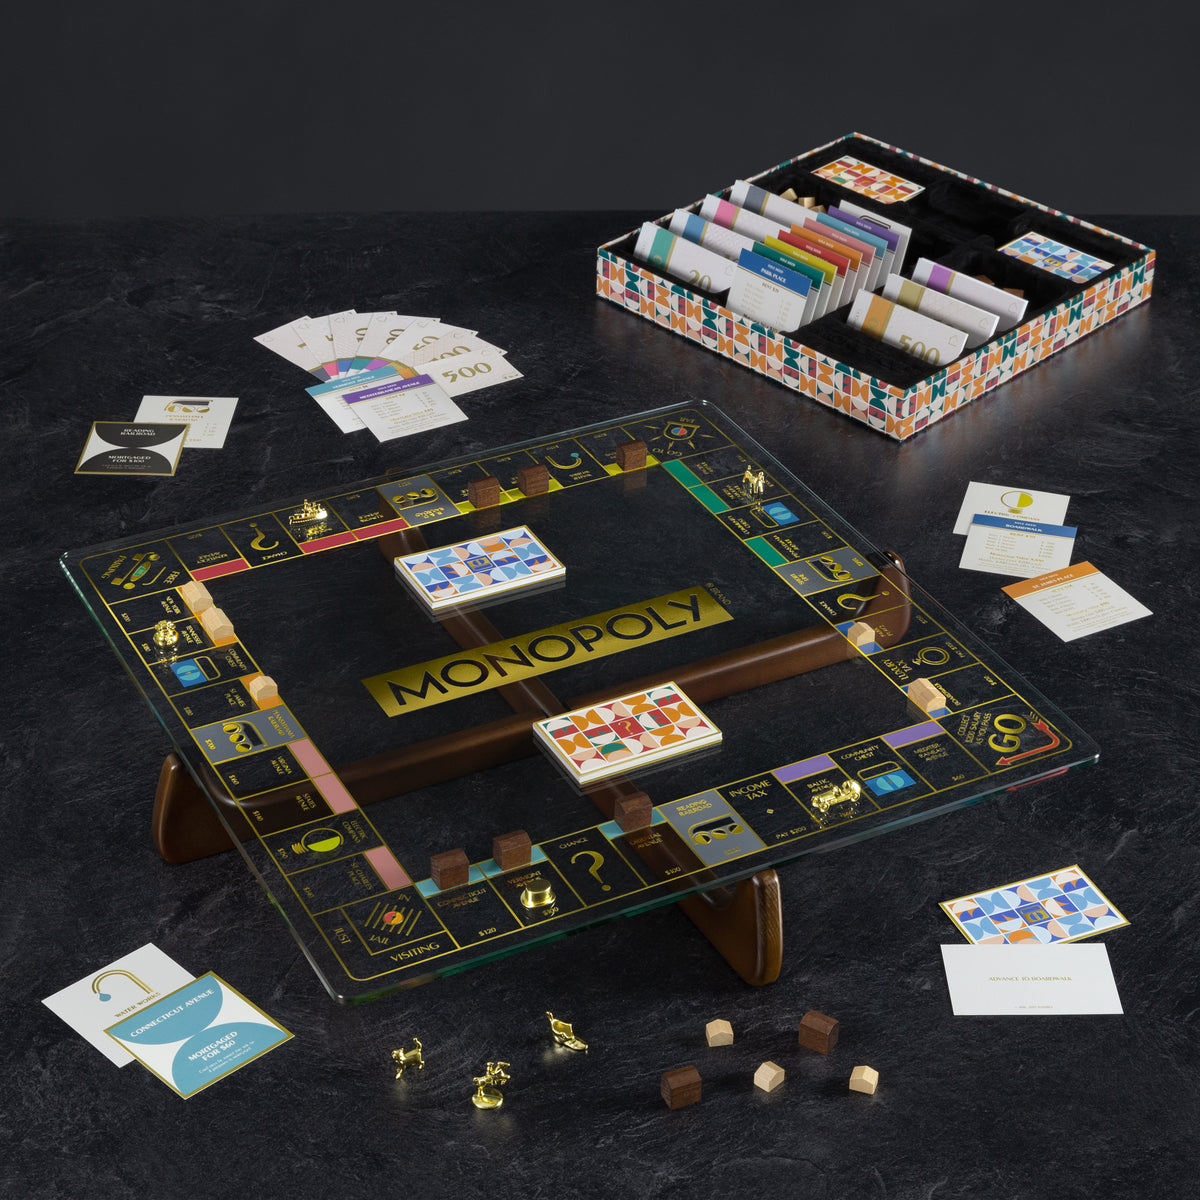 Monopoly Prisma Glass Edition